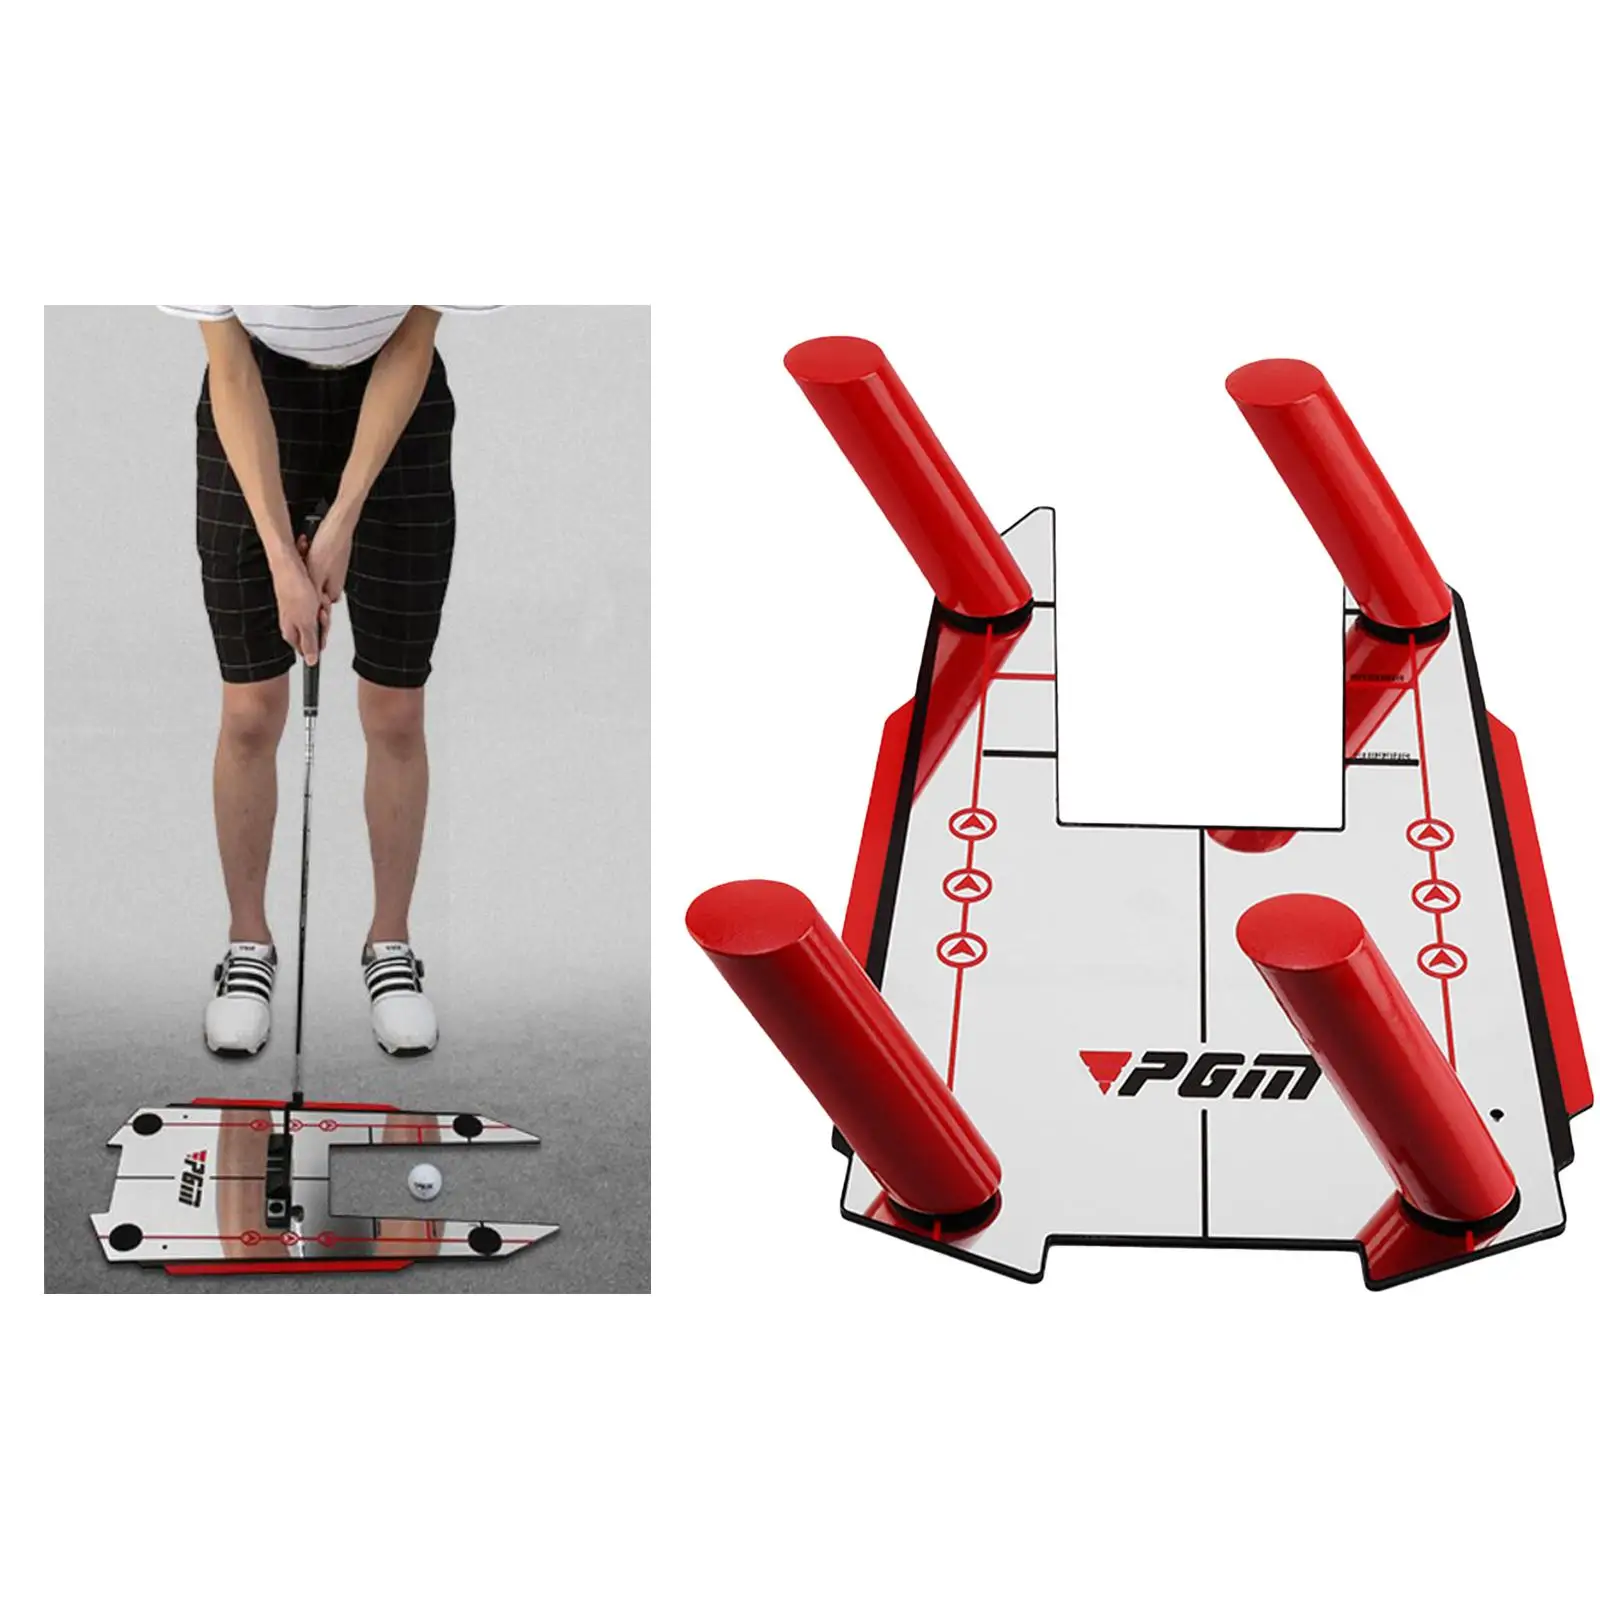 20x Golf Putting  Alignment Mirror Training Aid Golf Accessories